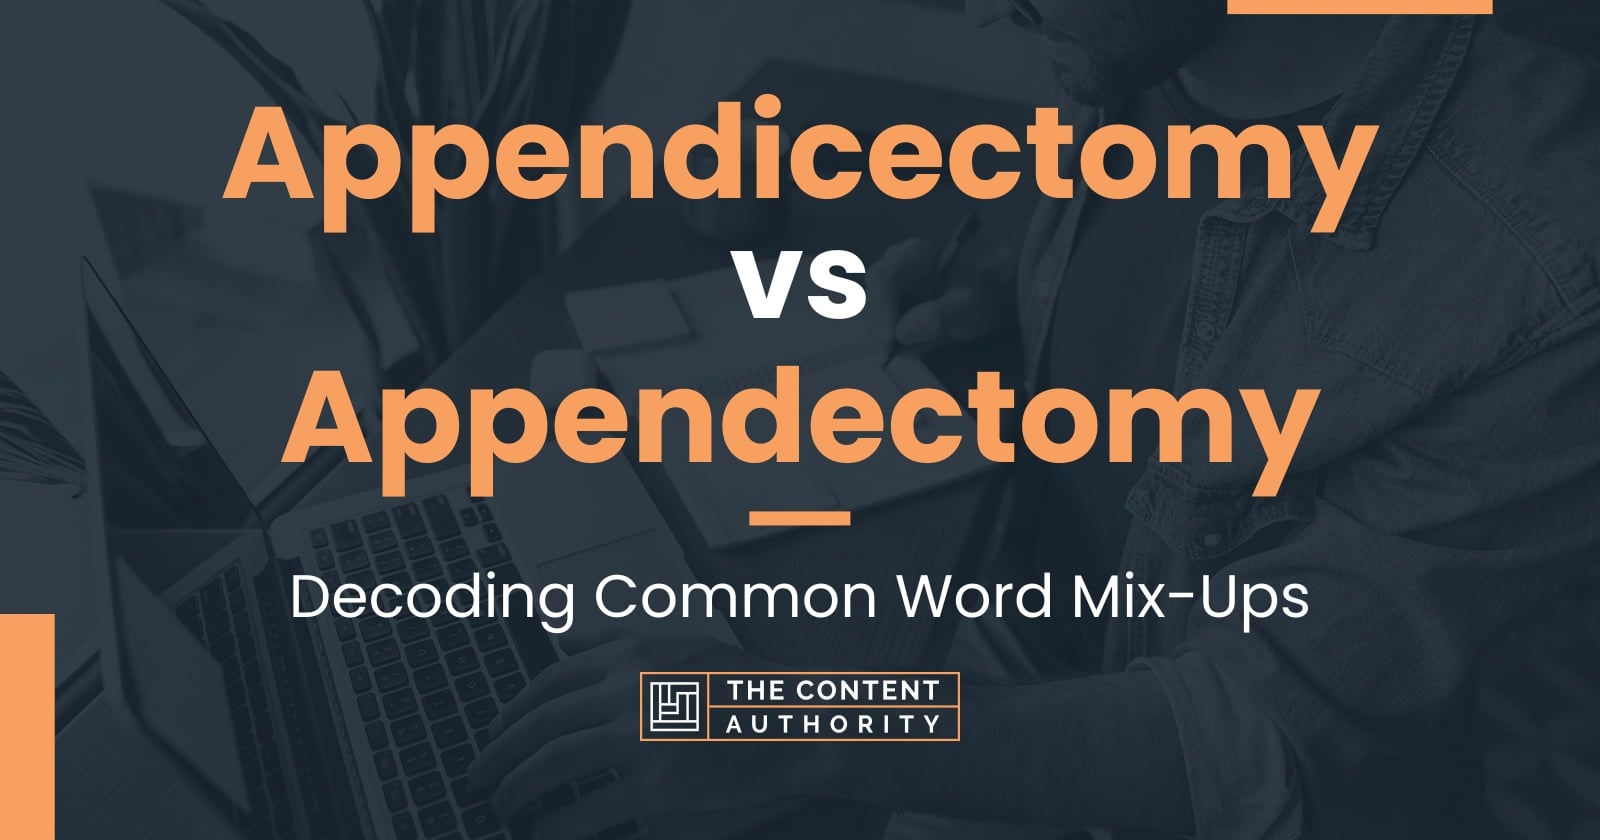 Appendicectomy vs Appendectomy: Decoding Common Word Mix-Ups